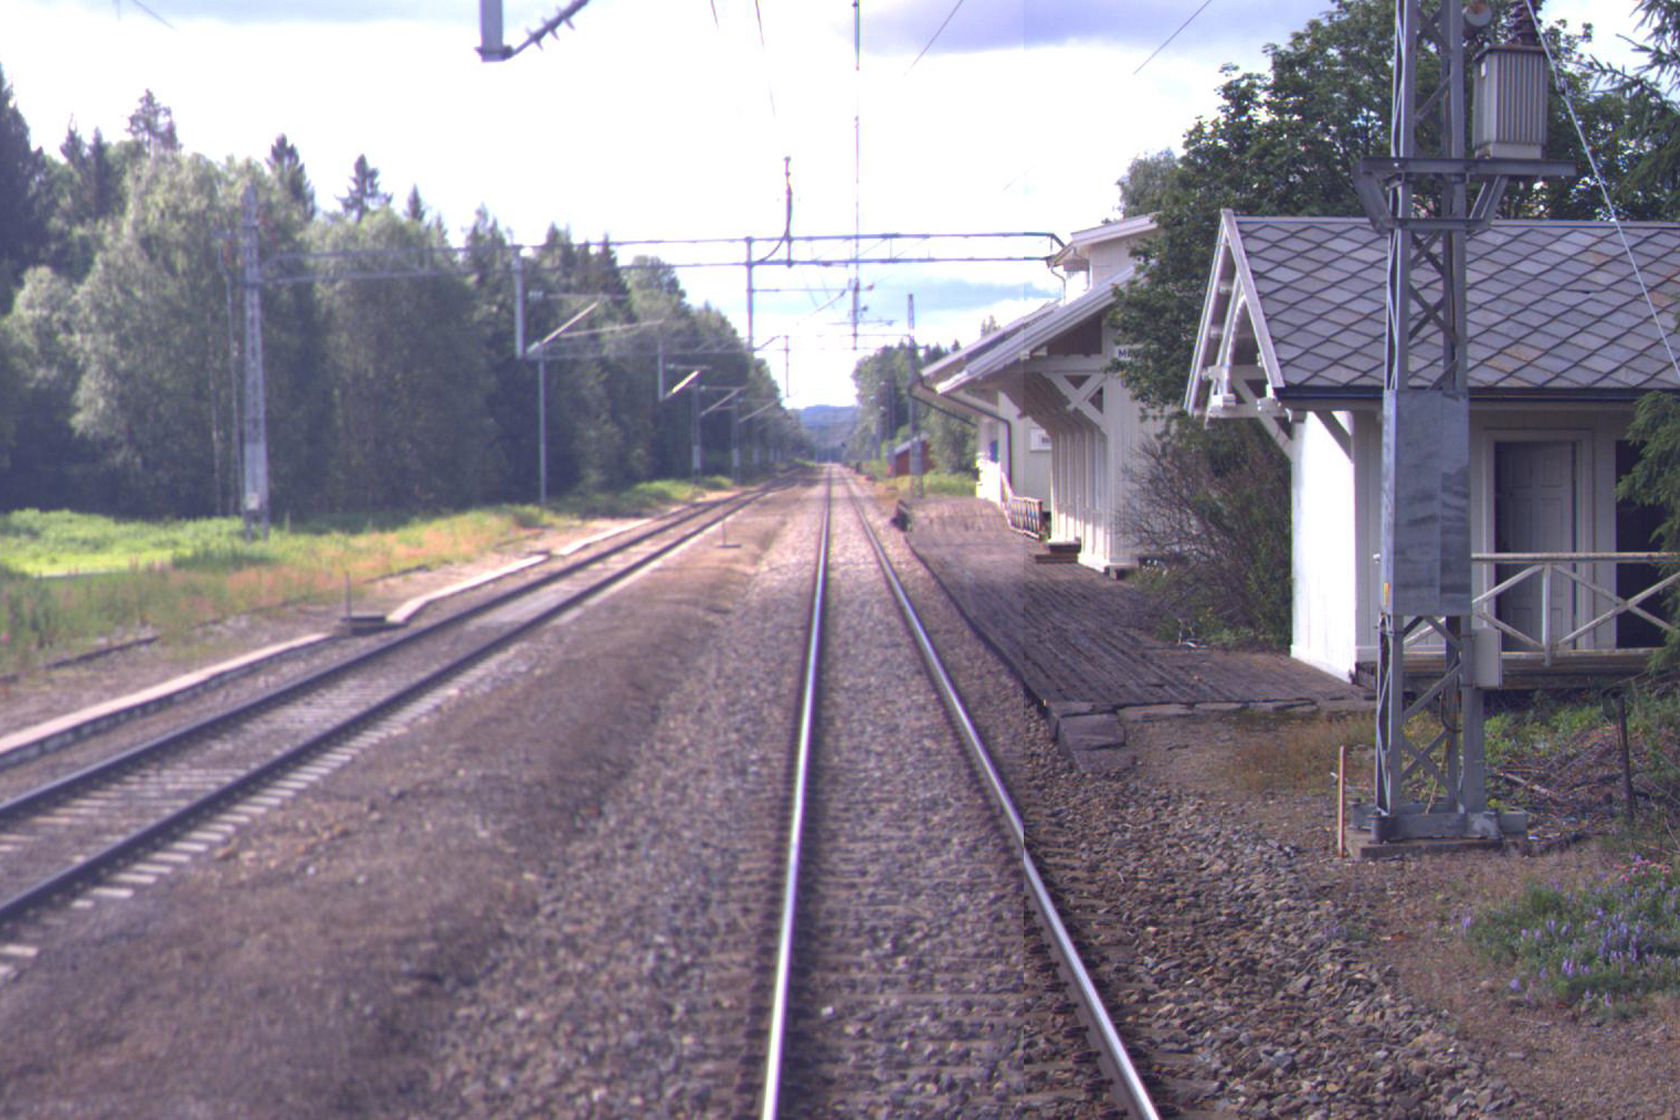 Tracks and building at Matrand station